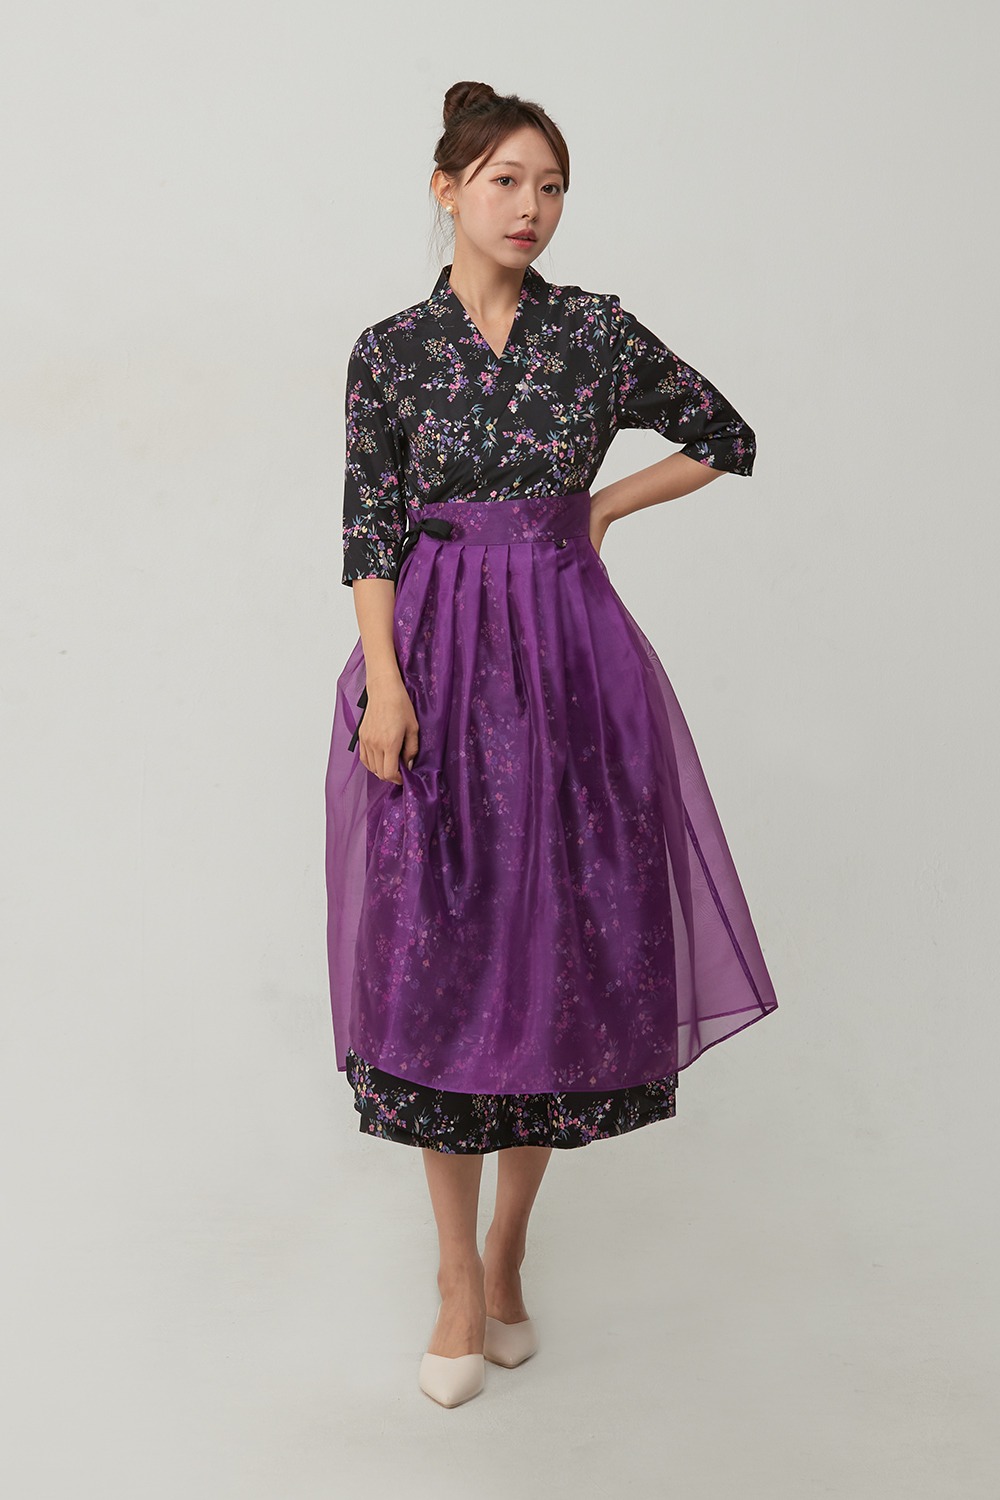 Yeomi Double Layer Cheollik Dress [Purple]